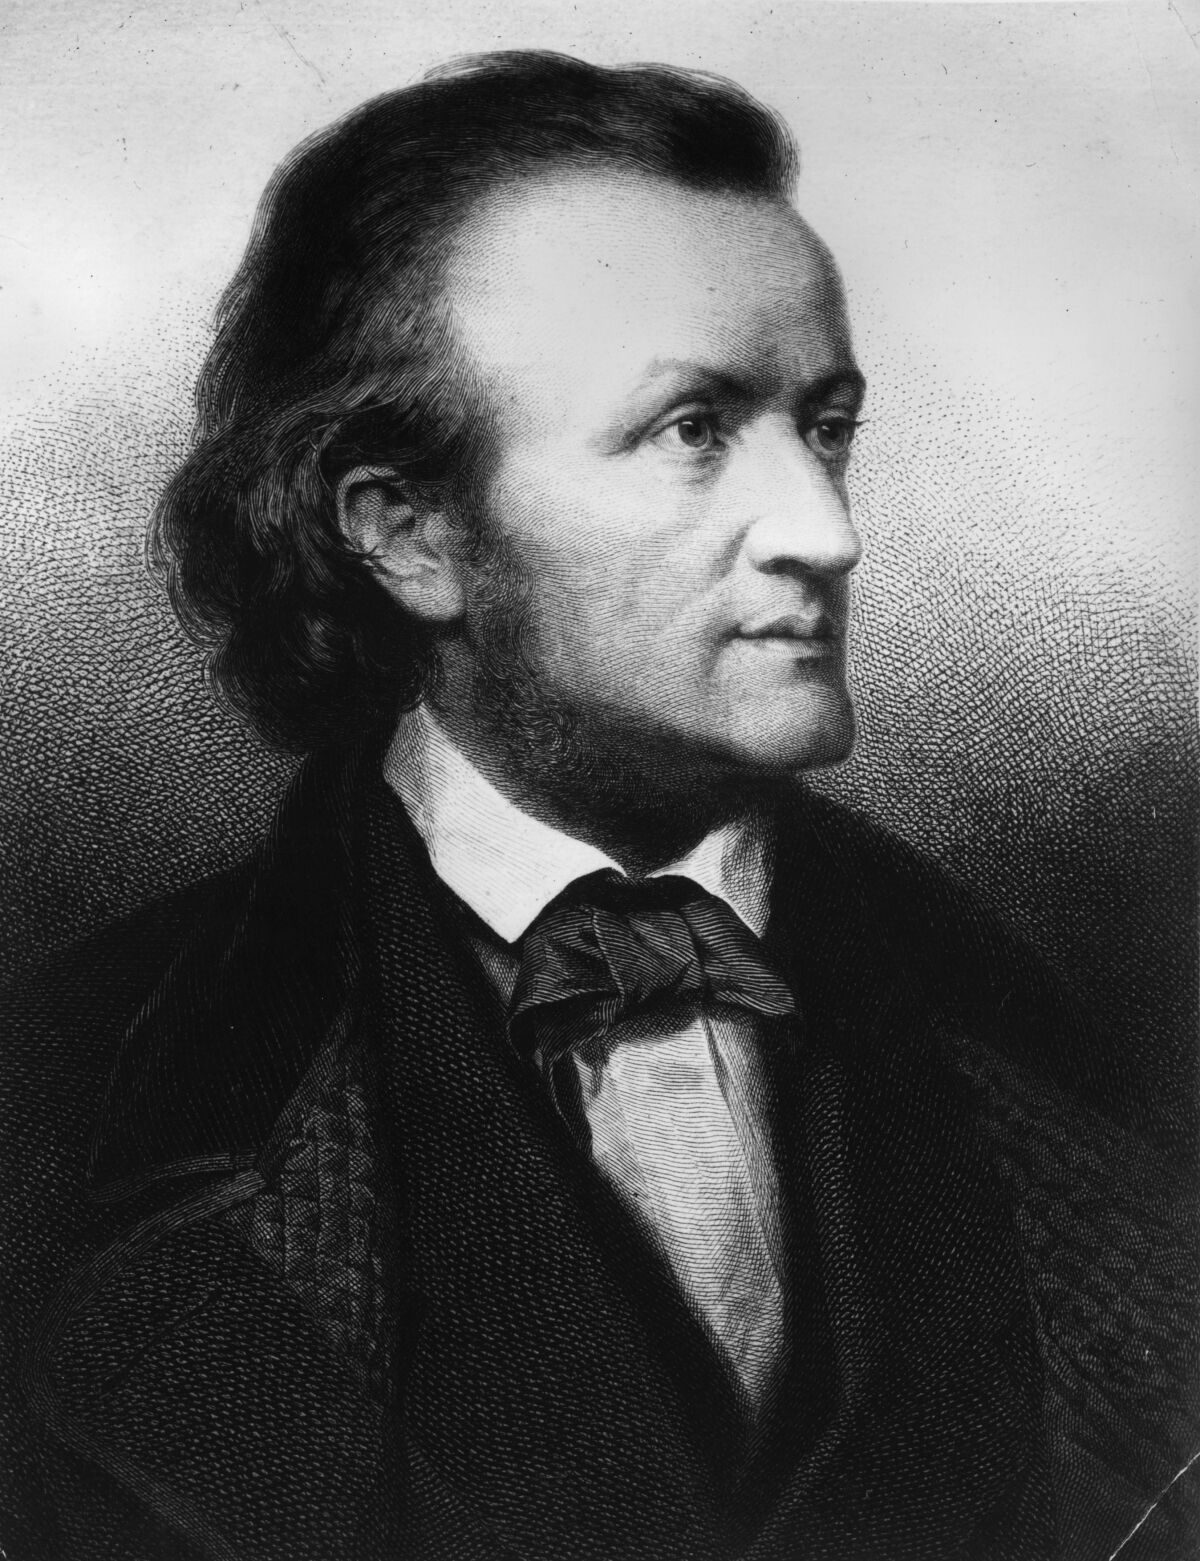 German composer and musical theorist Richard Wilhelm Wagner